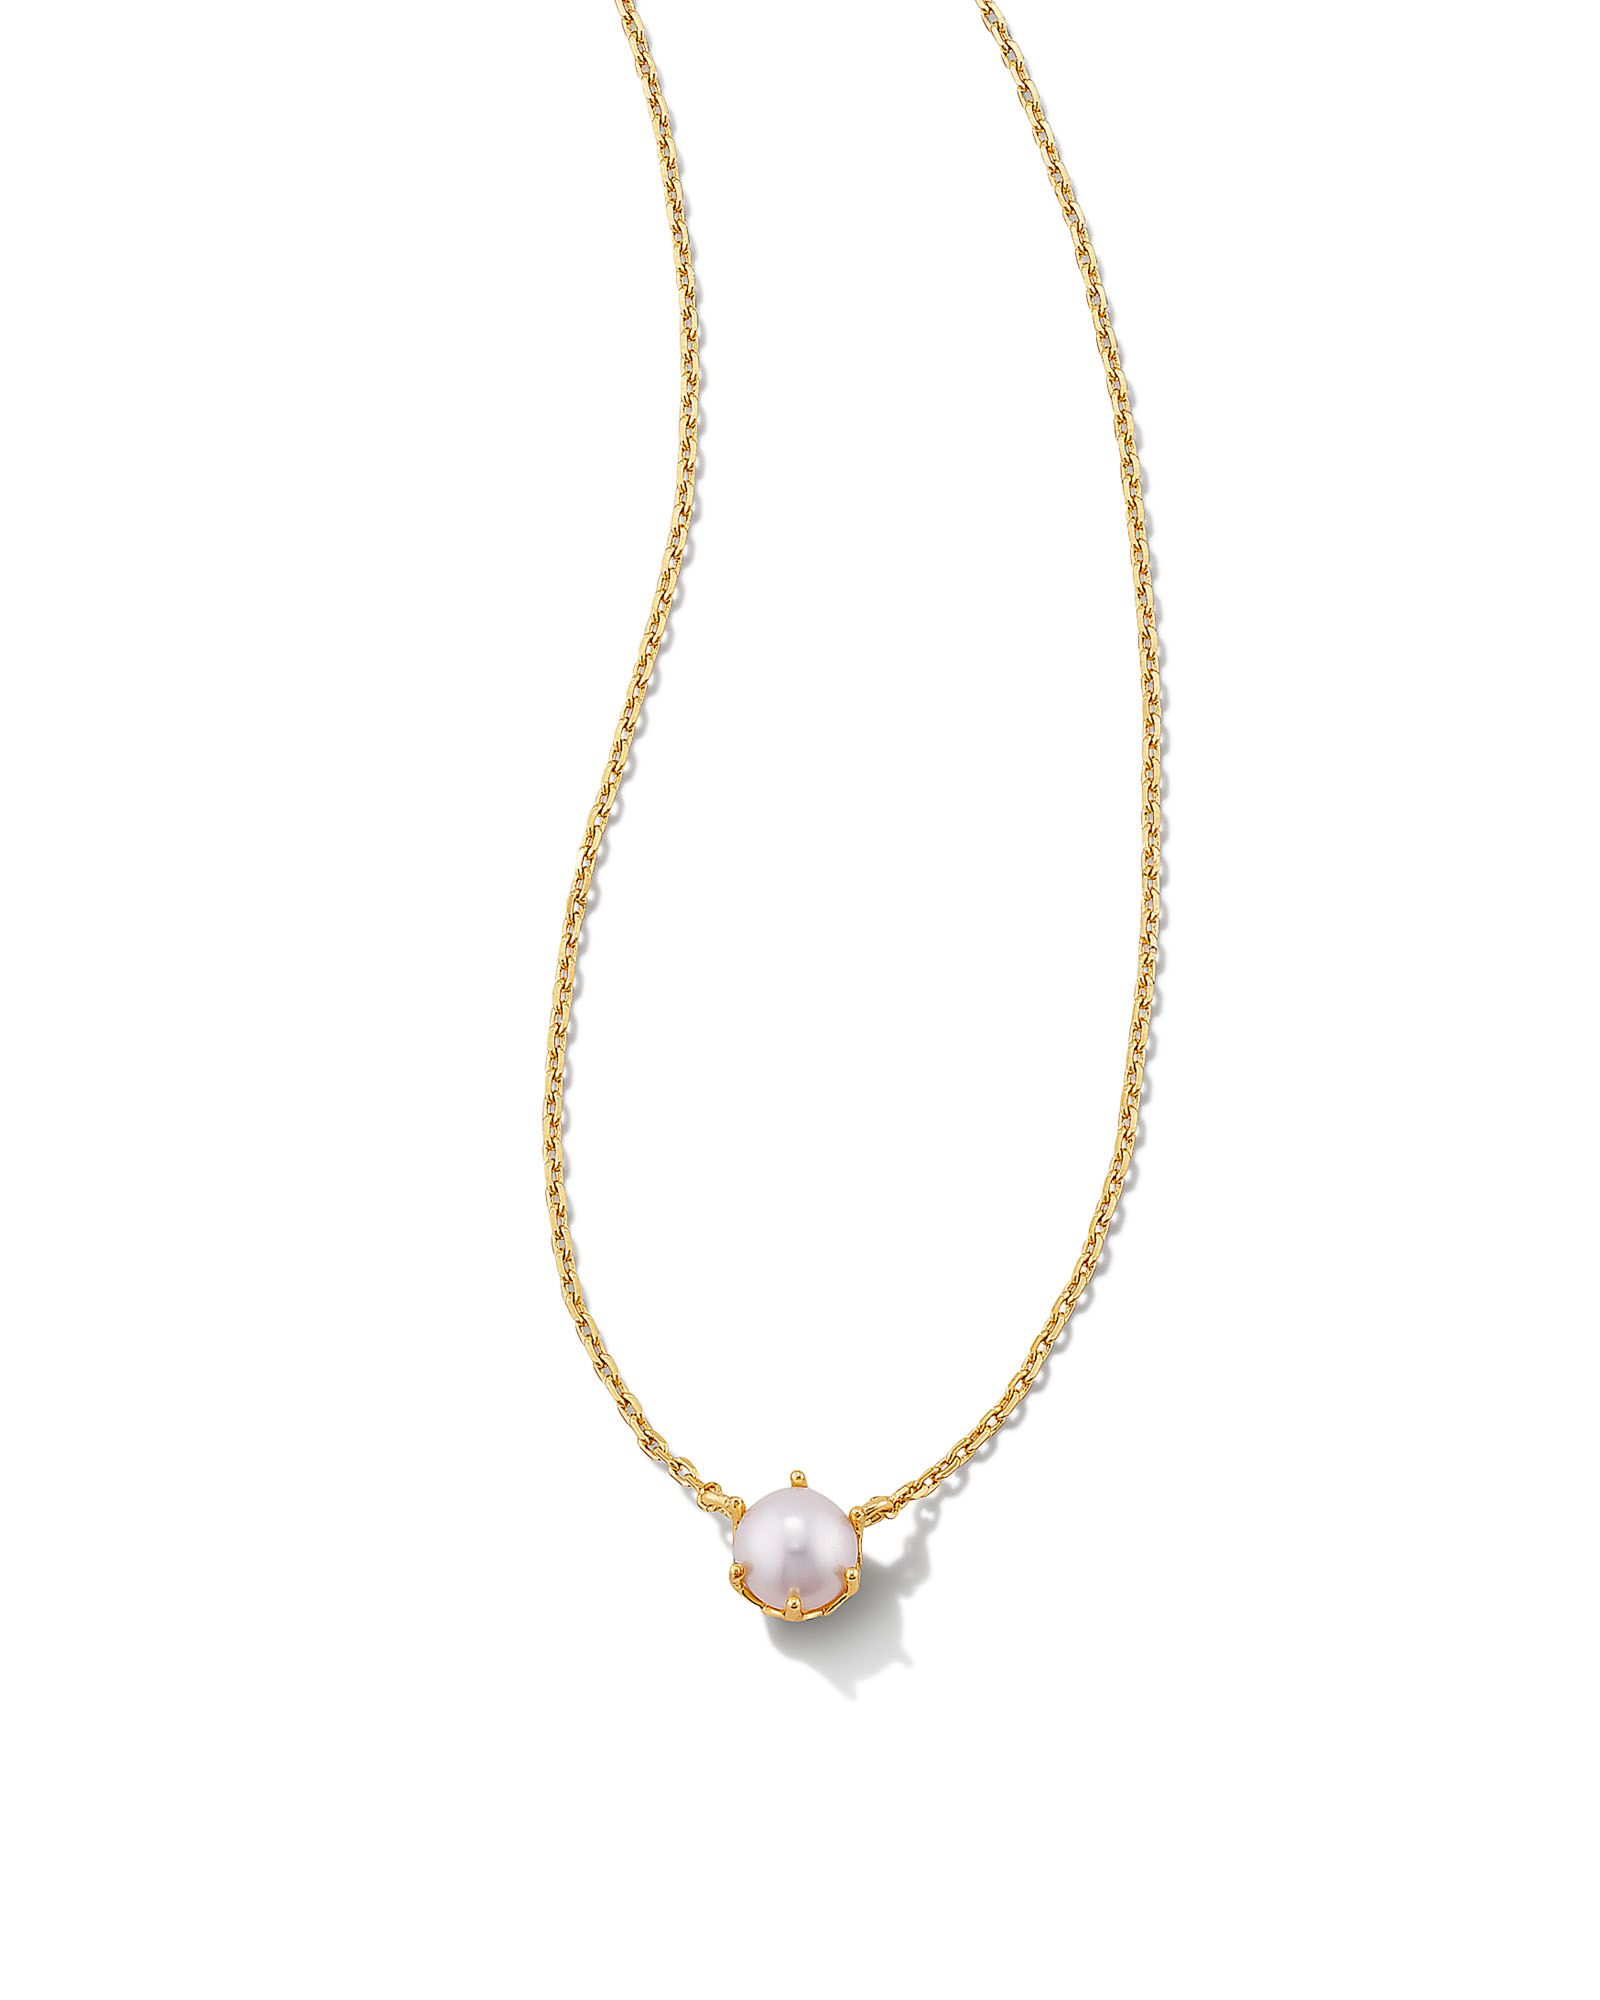 Ashton Gold Pendant Necklace in White Pearl | Kendra Scott